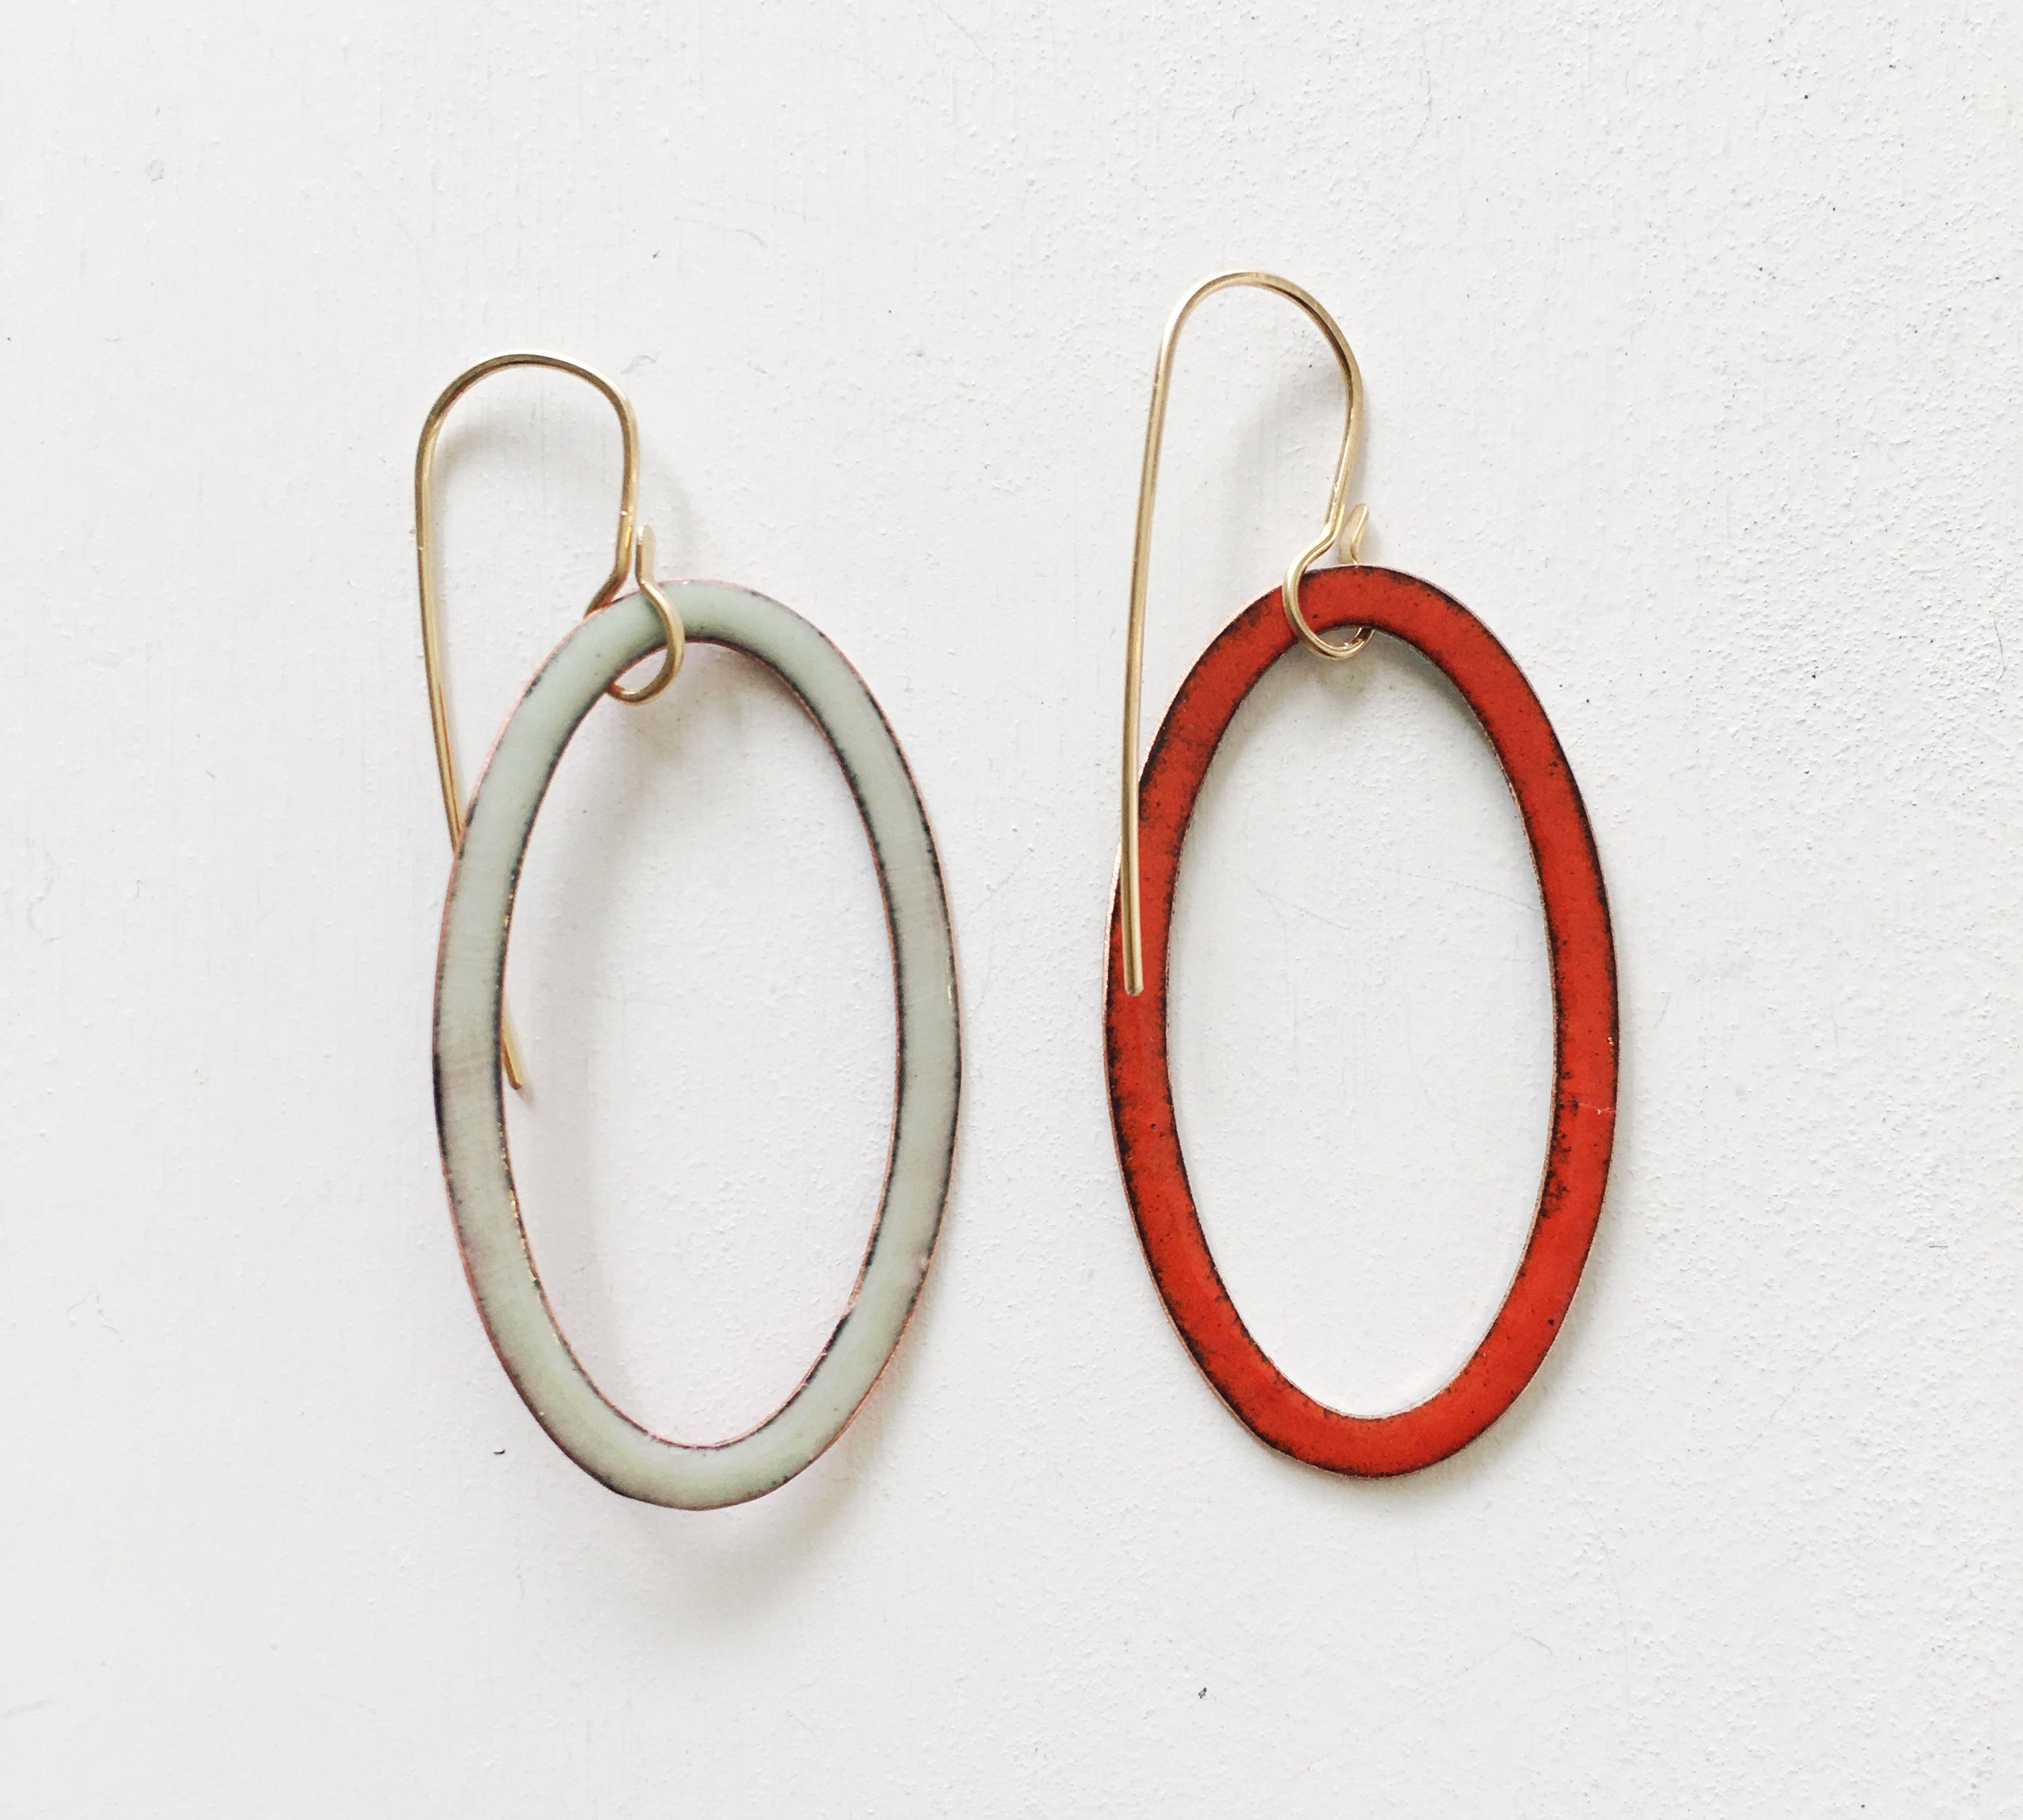 Oval outline earrings